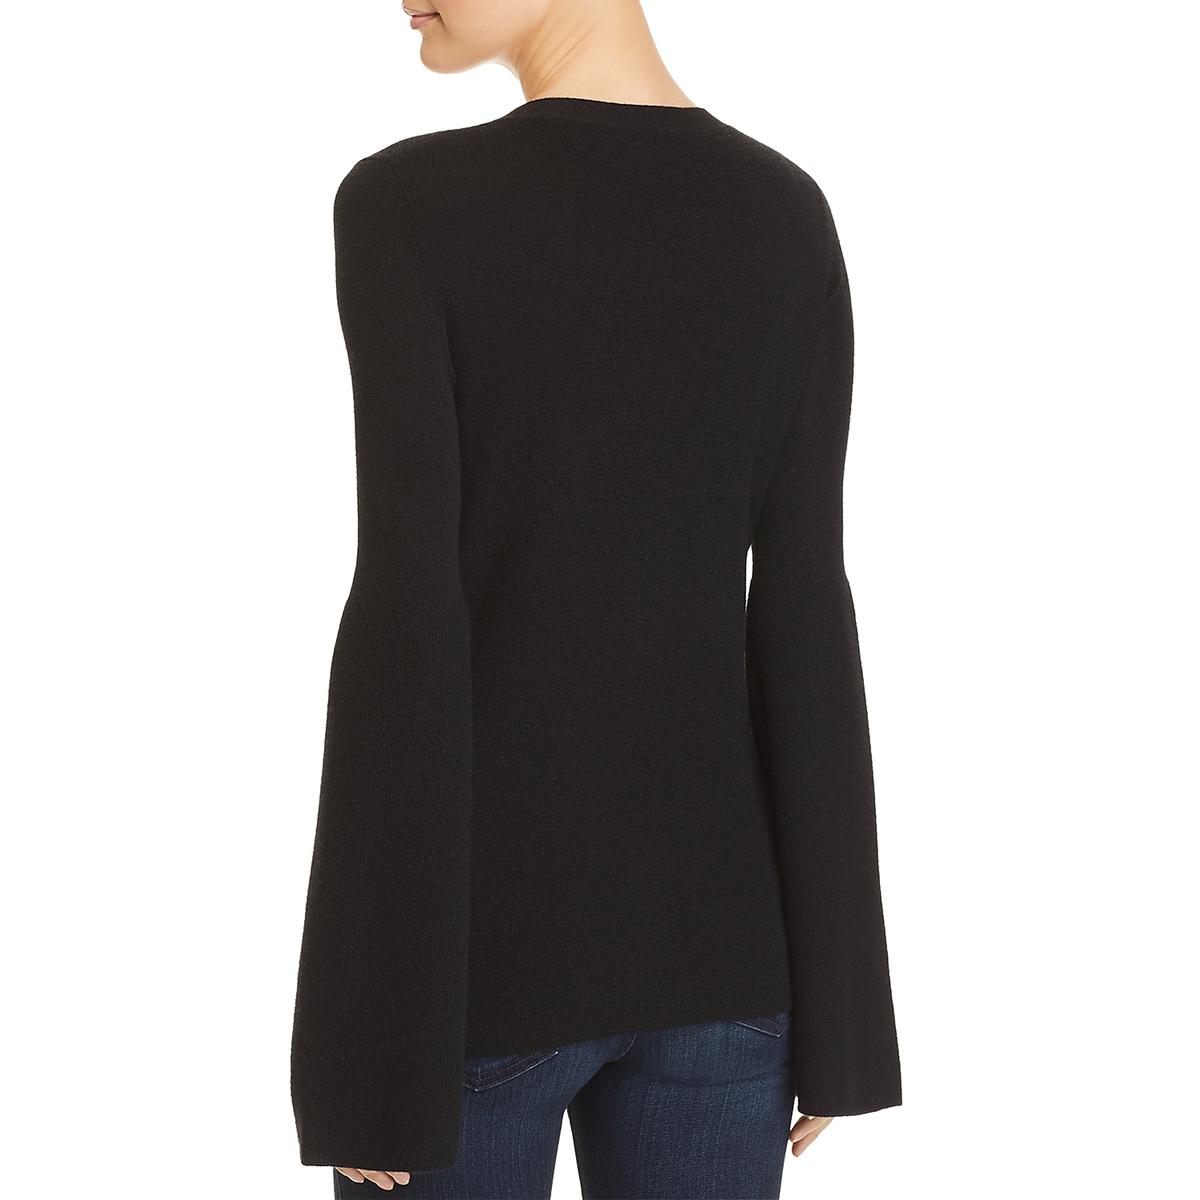 Theory Womens Black Cashmere V-Neck Cardigan Sweater Top P BHFO 7897 | eBay